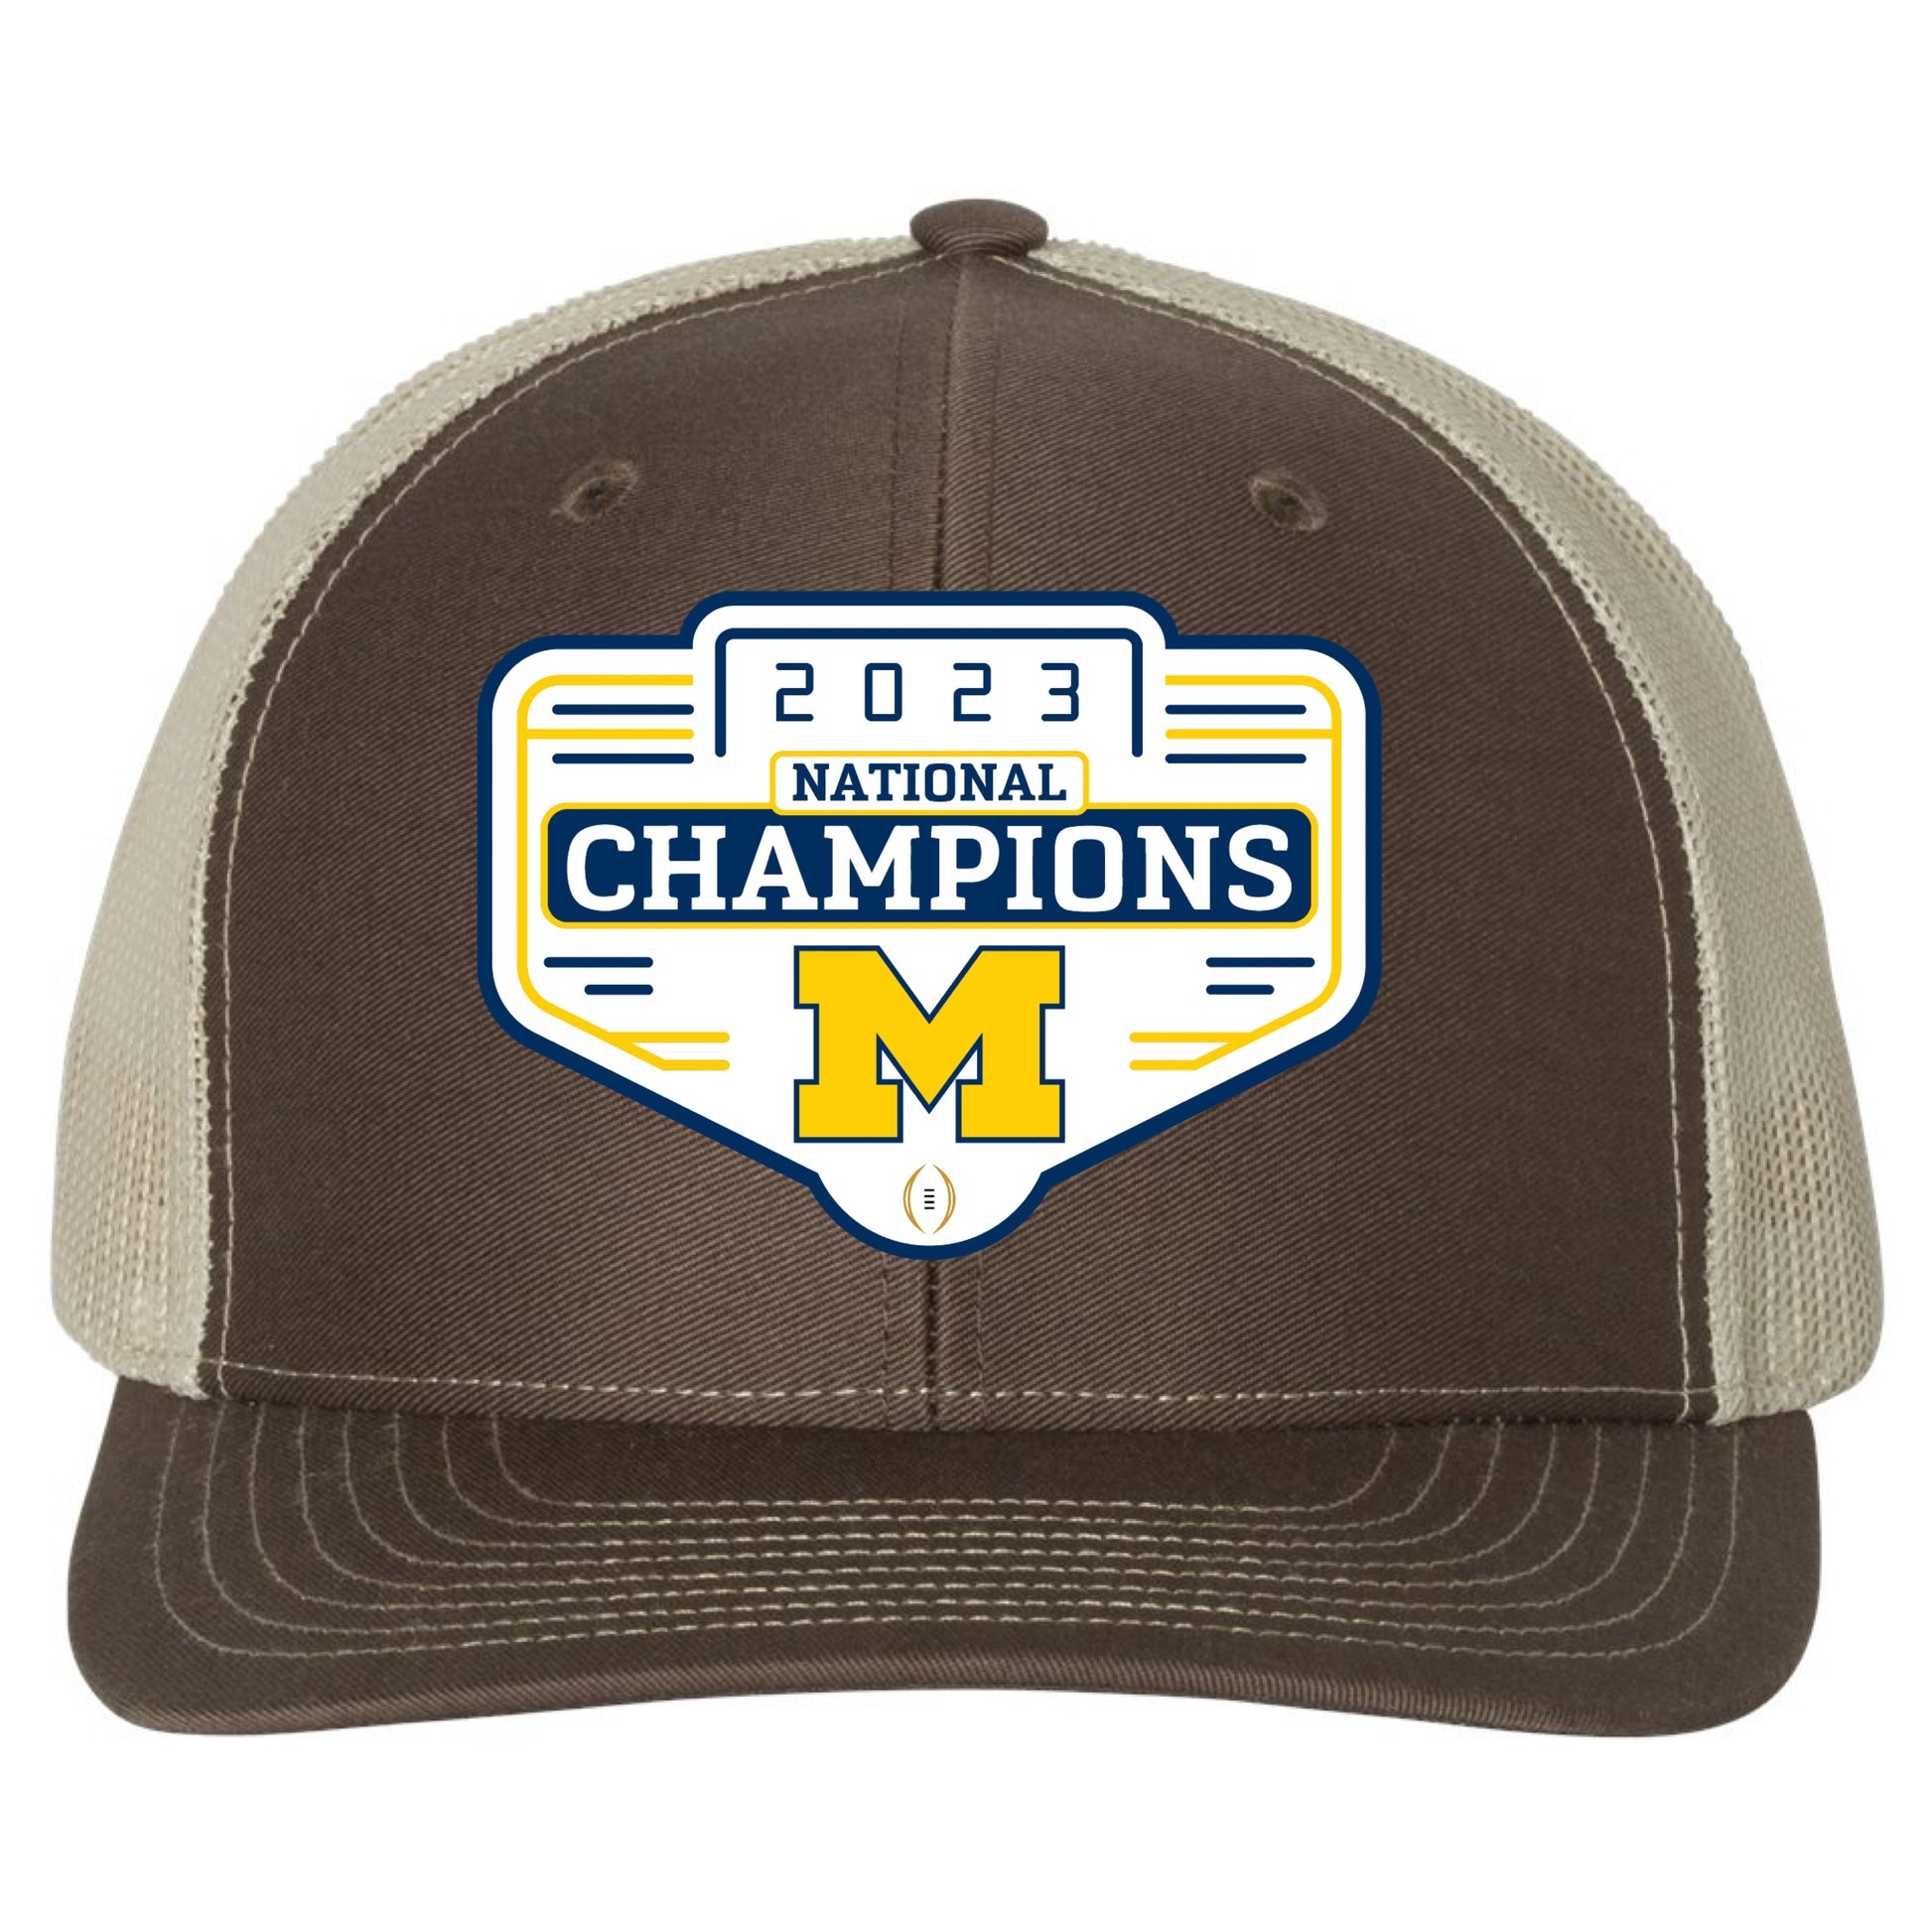 Michigan Wolverines 2023 National Champions 3D YP Snapback Trucker Hat- Brown/ Tan - Ten Gallon Hat Co.